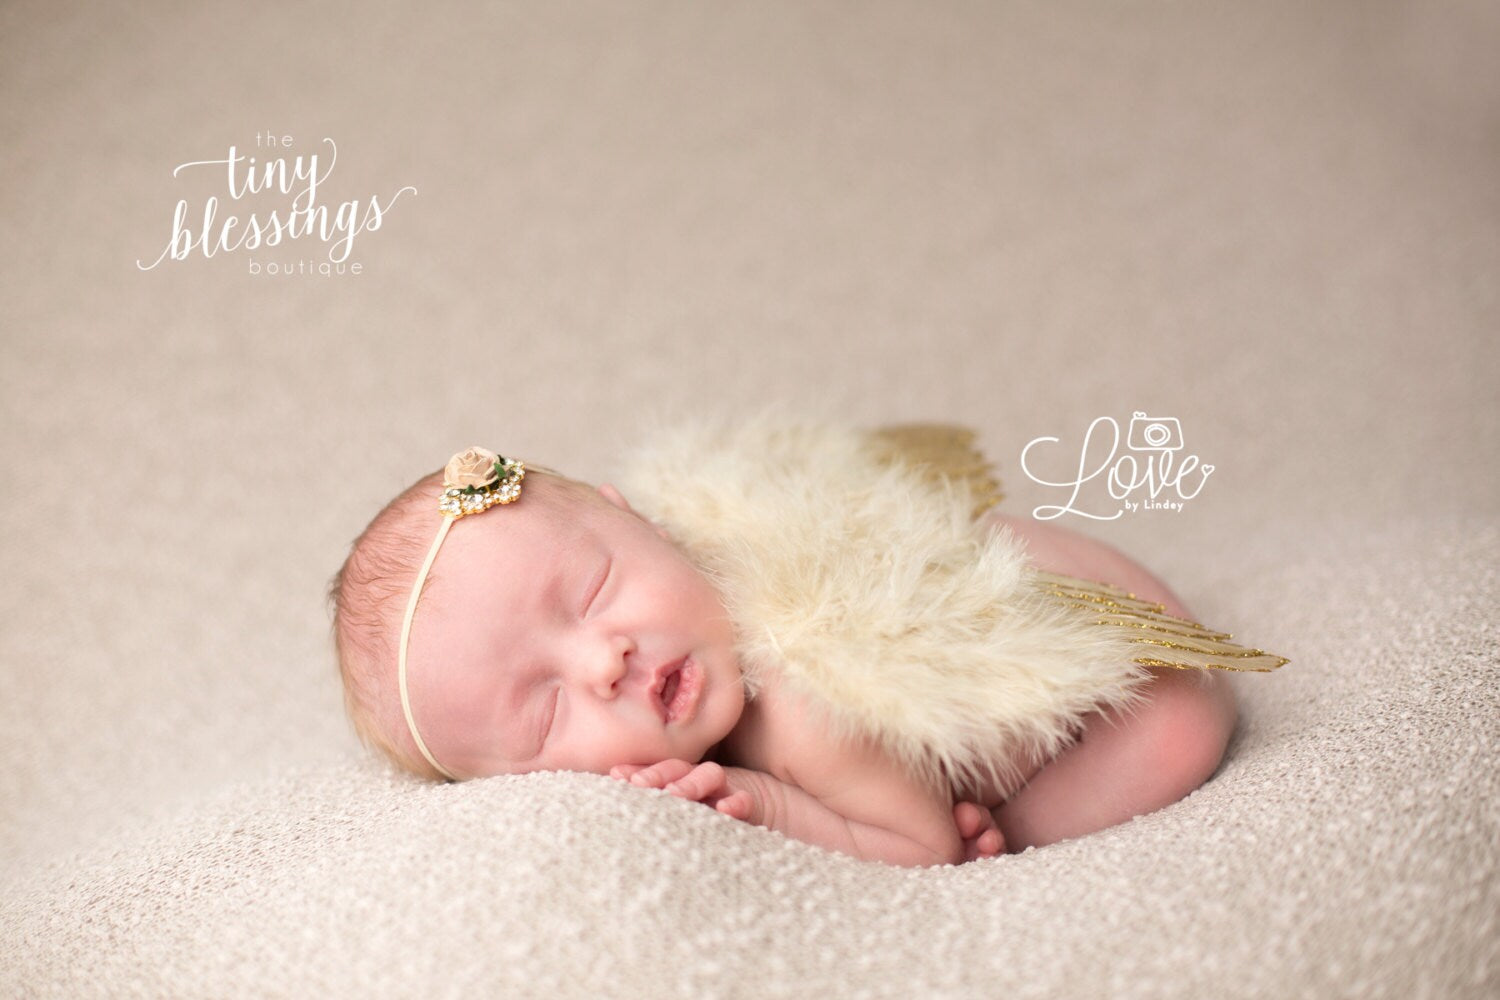 Gold Baby Wing Set / Baby Angel Wing Set / Rhinestone Headband / Tan Angel Wings / Newborn Photo Prop / Newborn Wing / Newborn Angel Costume